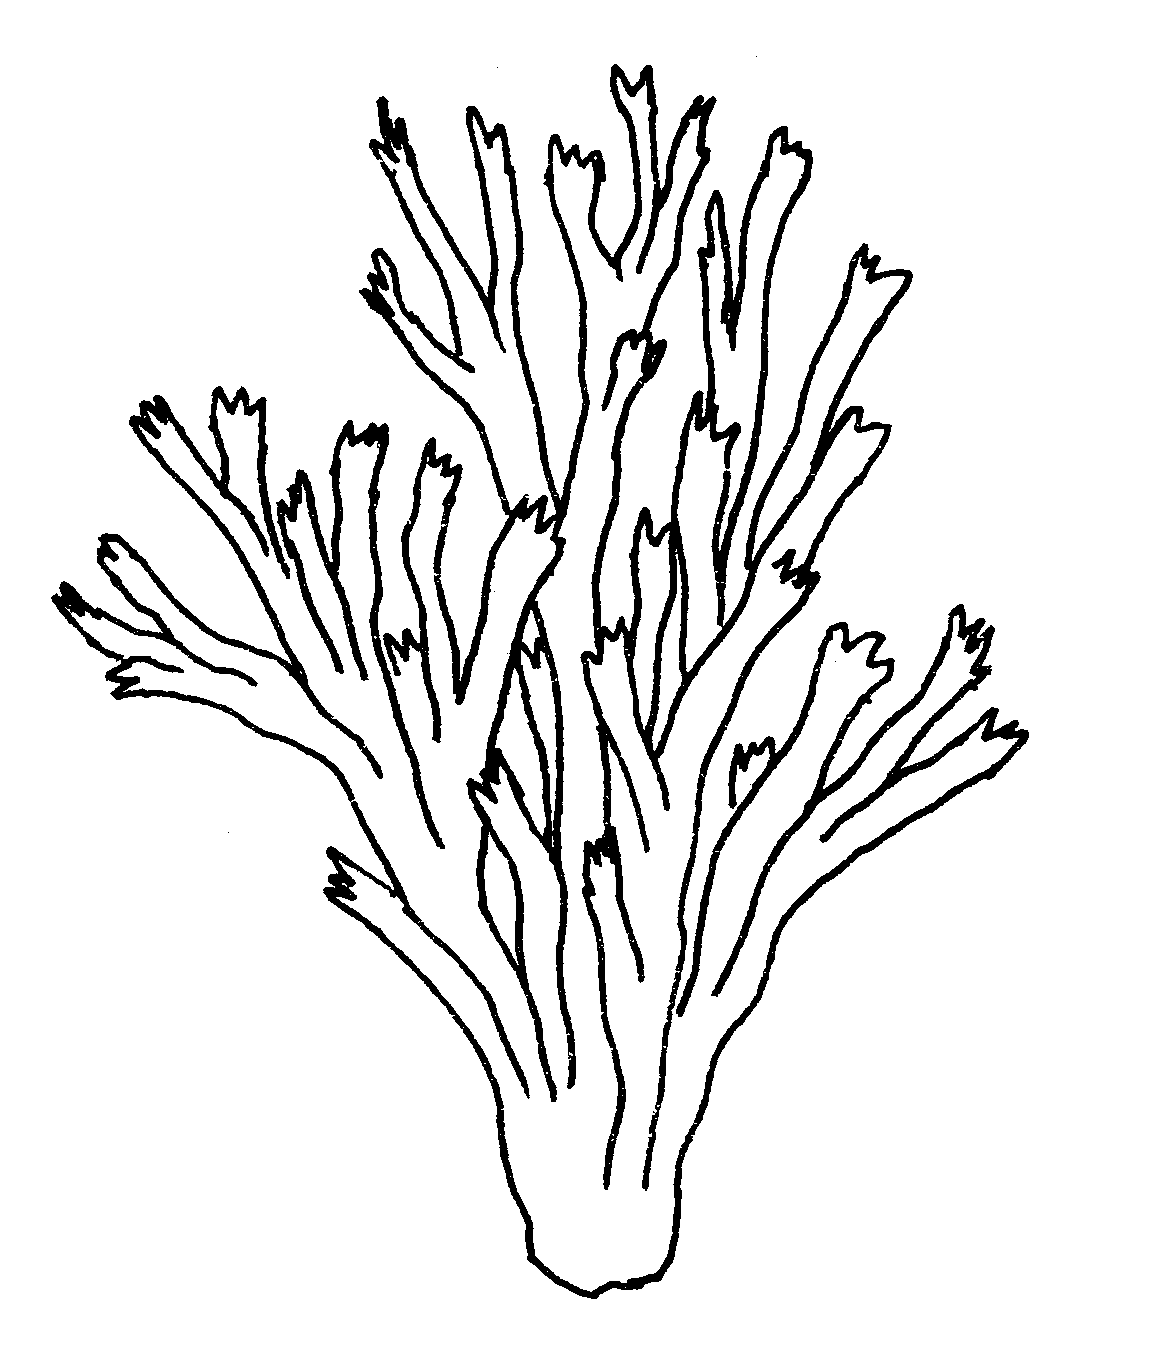 Coral reef drawing